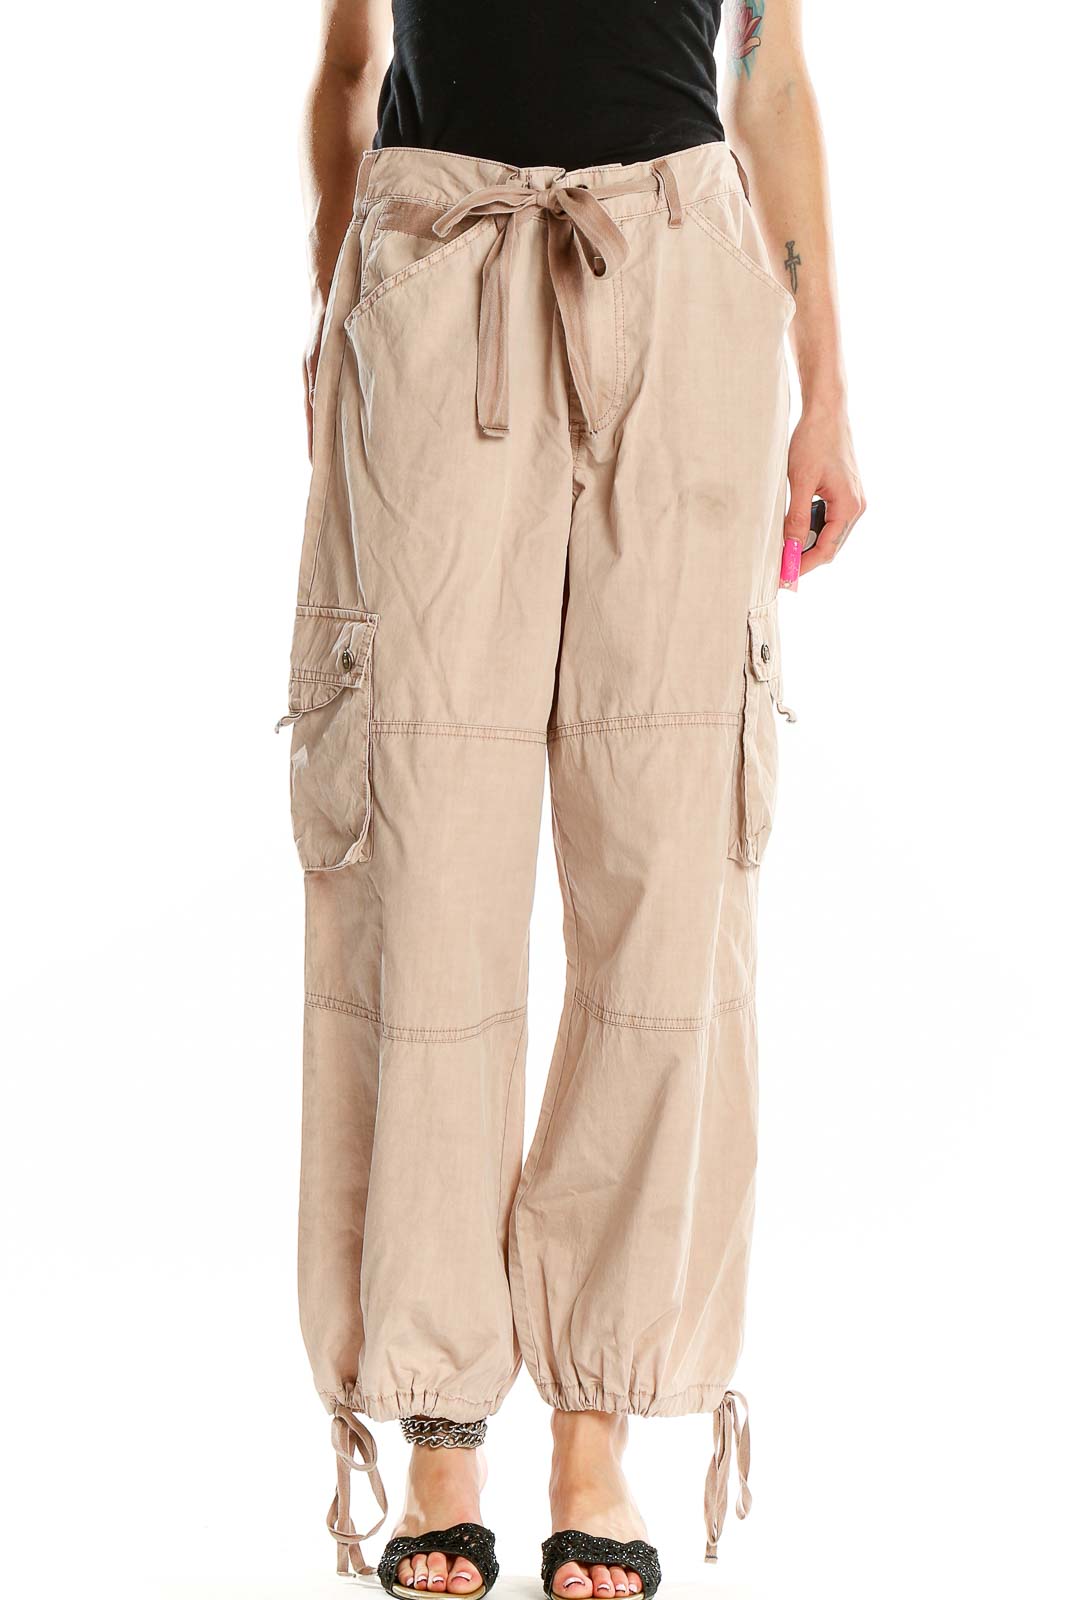 Beige Relaxed Full Length Carpenter Pants Front